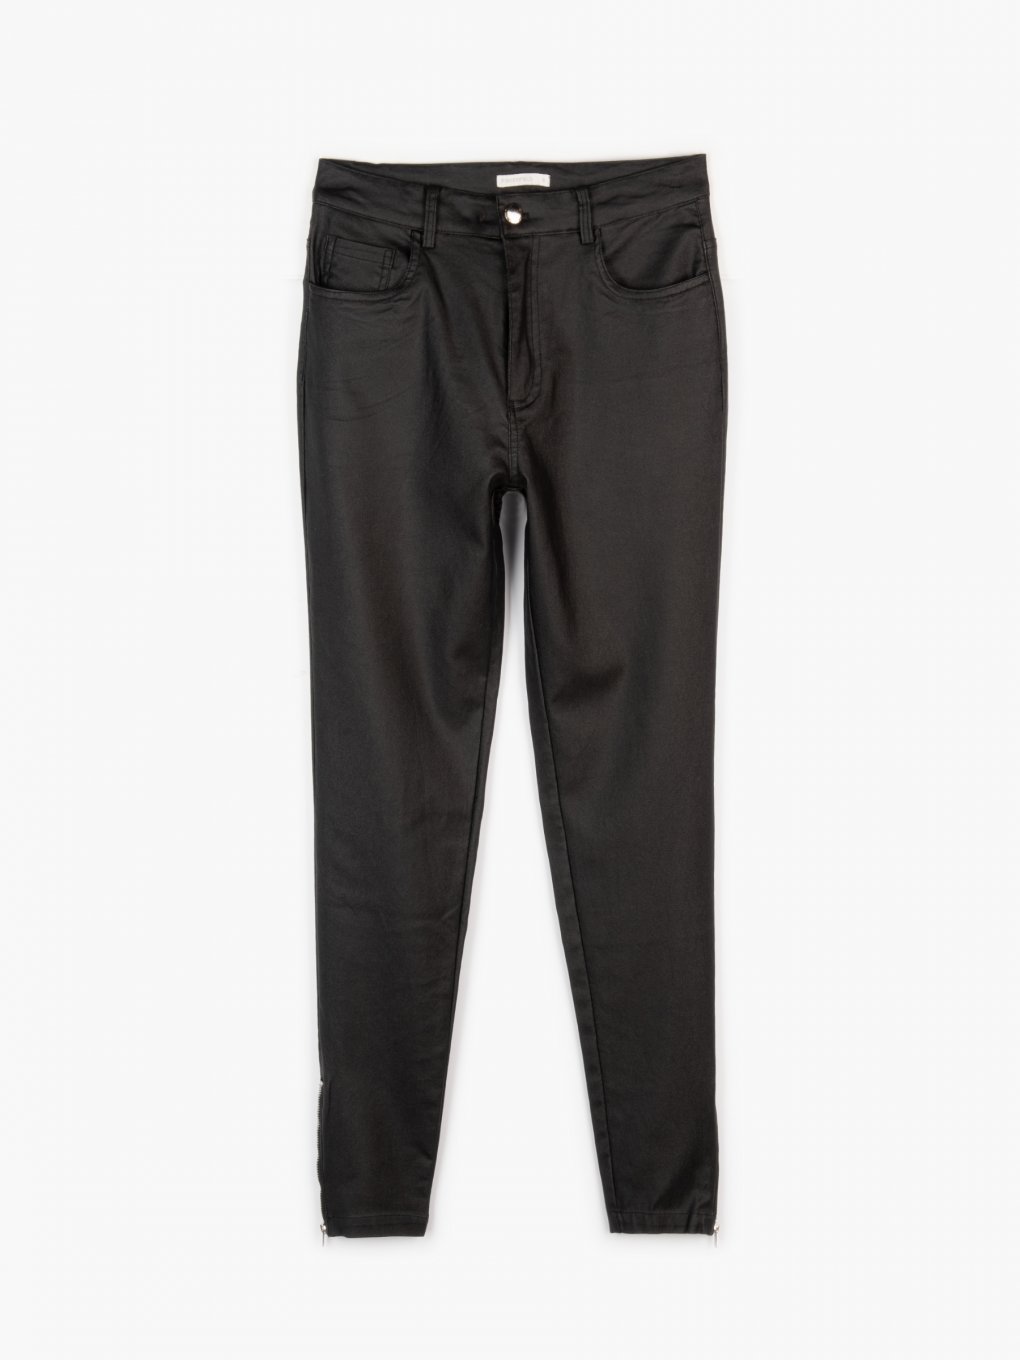 Coated skinny pants with hem zippers